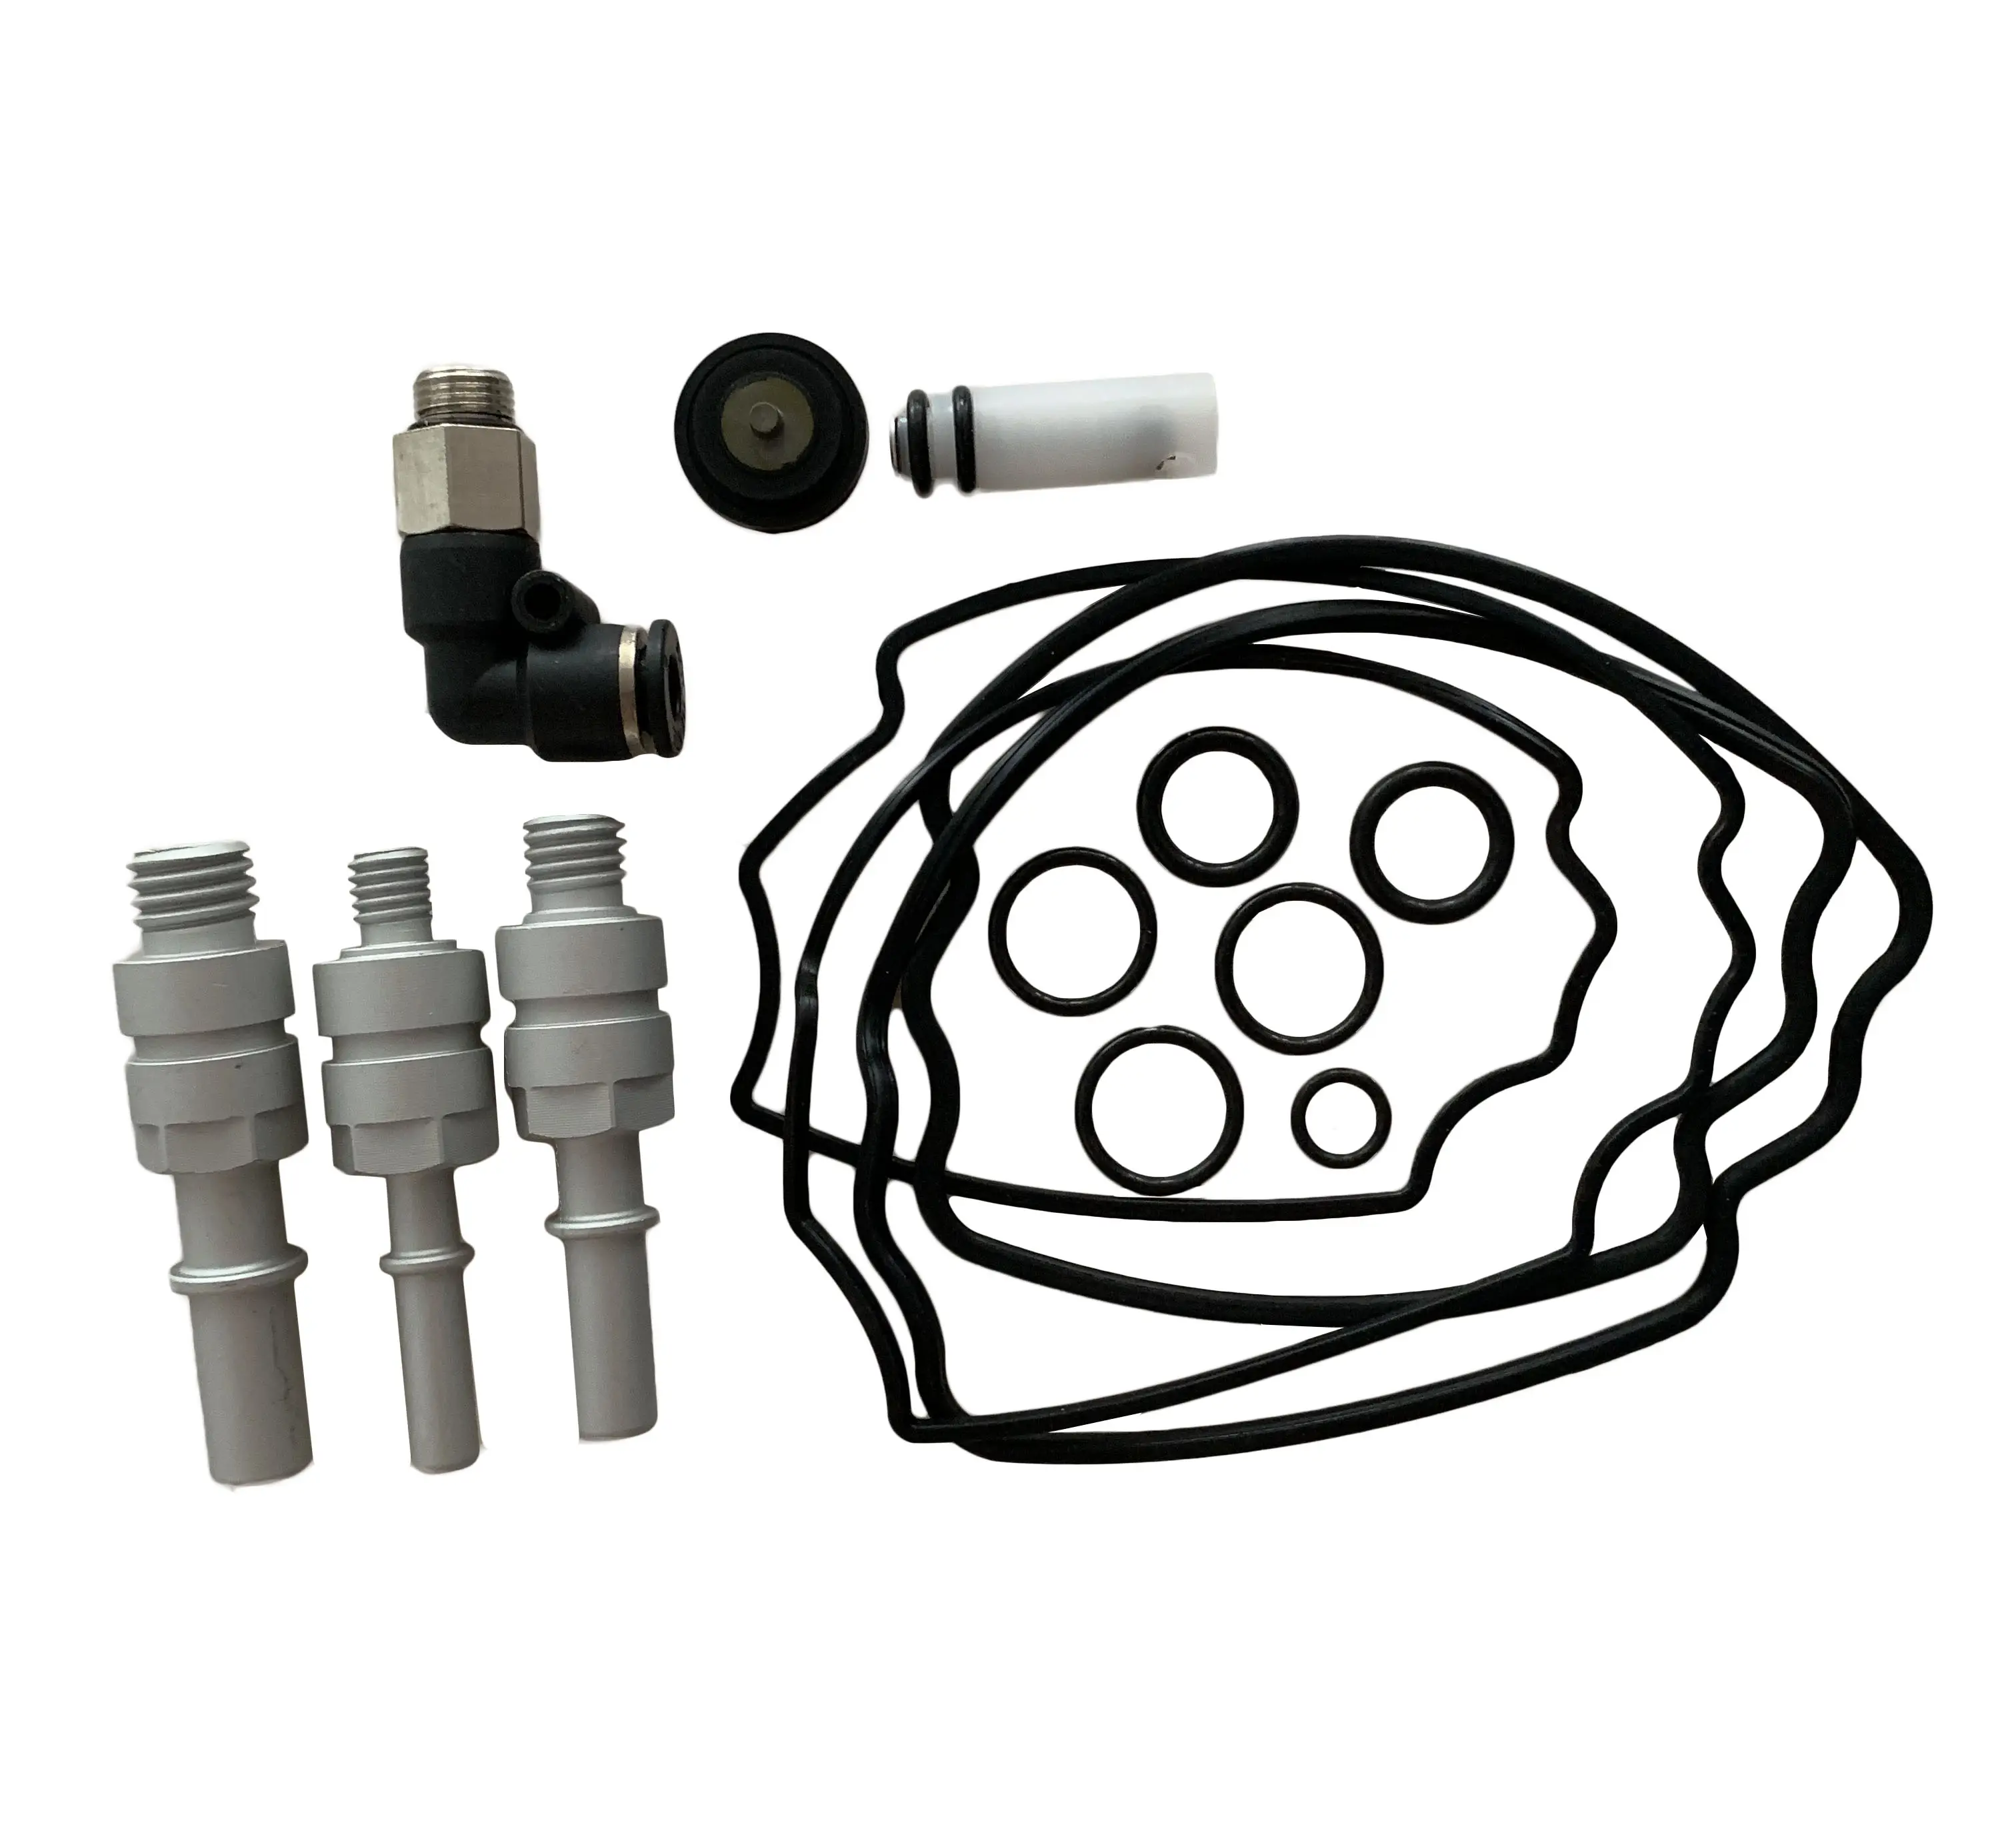 Oil Pump Plunger Repair Kits Fuel Injection Pump Repair Parts Sealing Ring Rubber ring